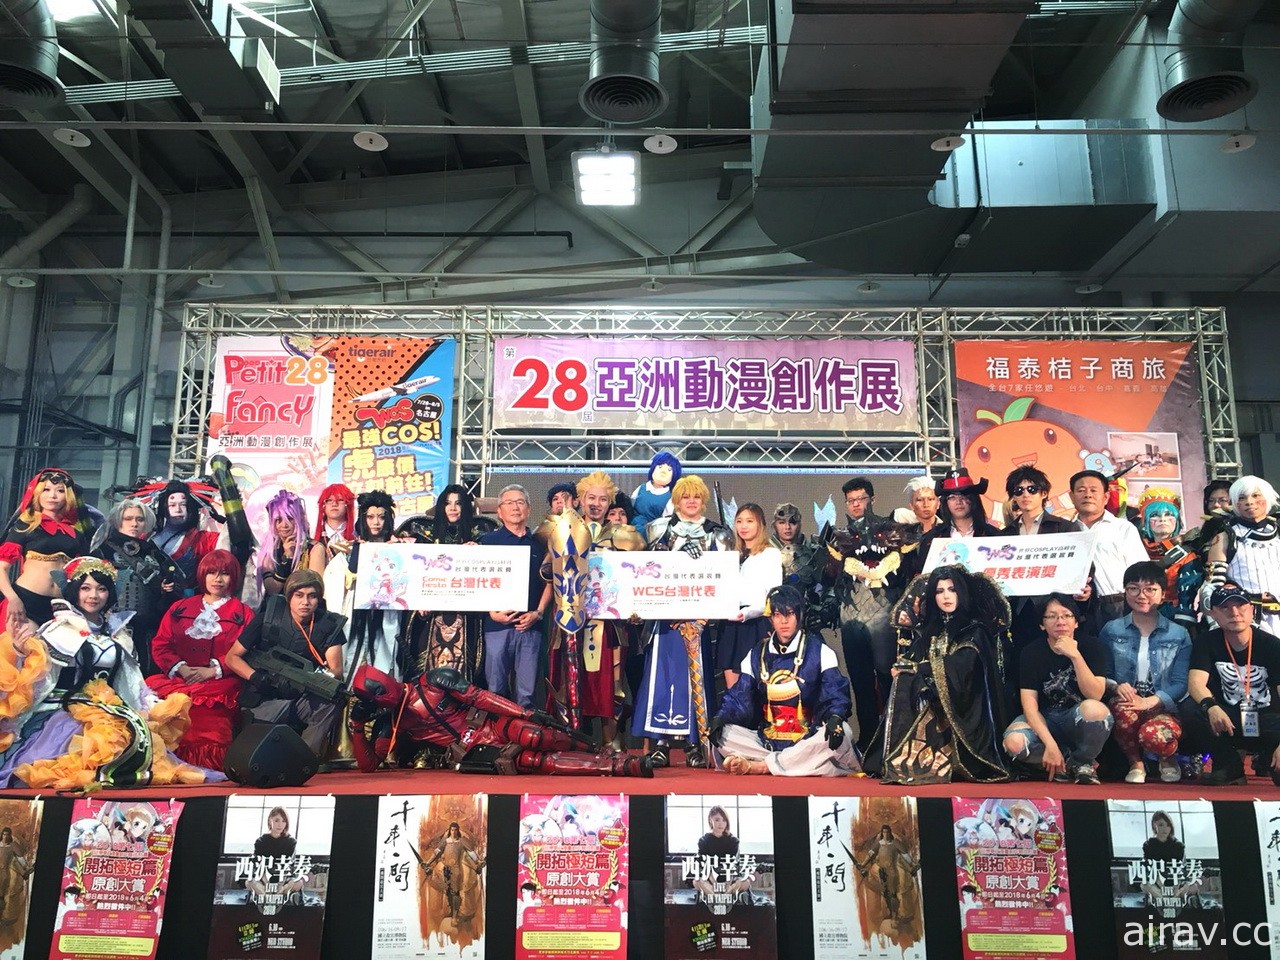 WCS 世界 Cosplay 大賽台灣賽事「神代竜哉&amp; Shimada」奪冠 將赴日爭奪世界冠軍